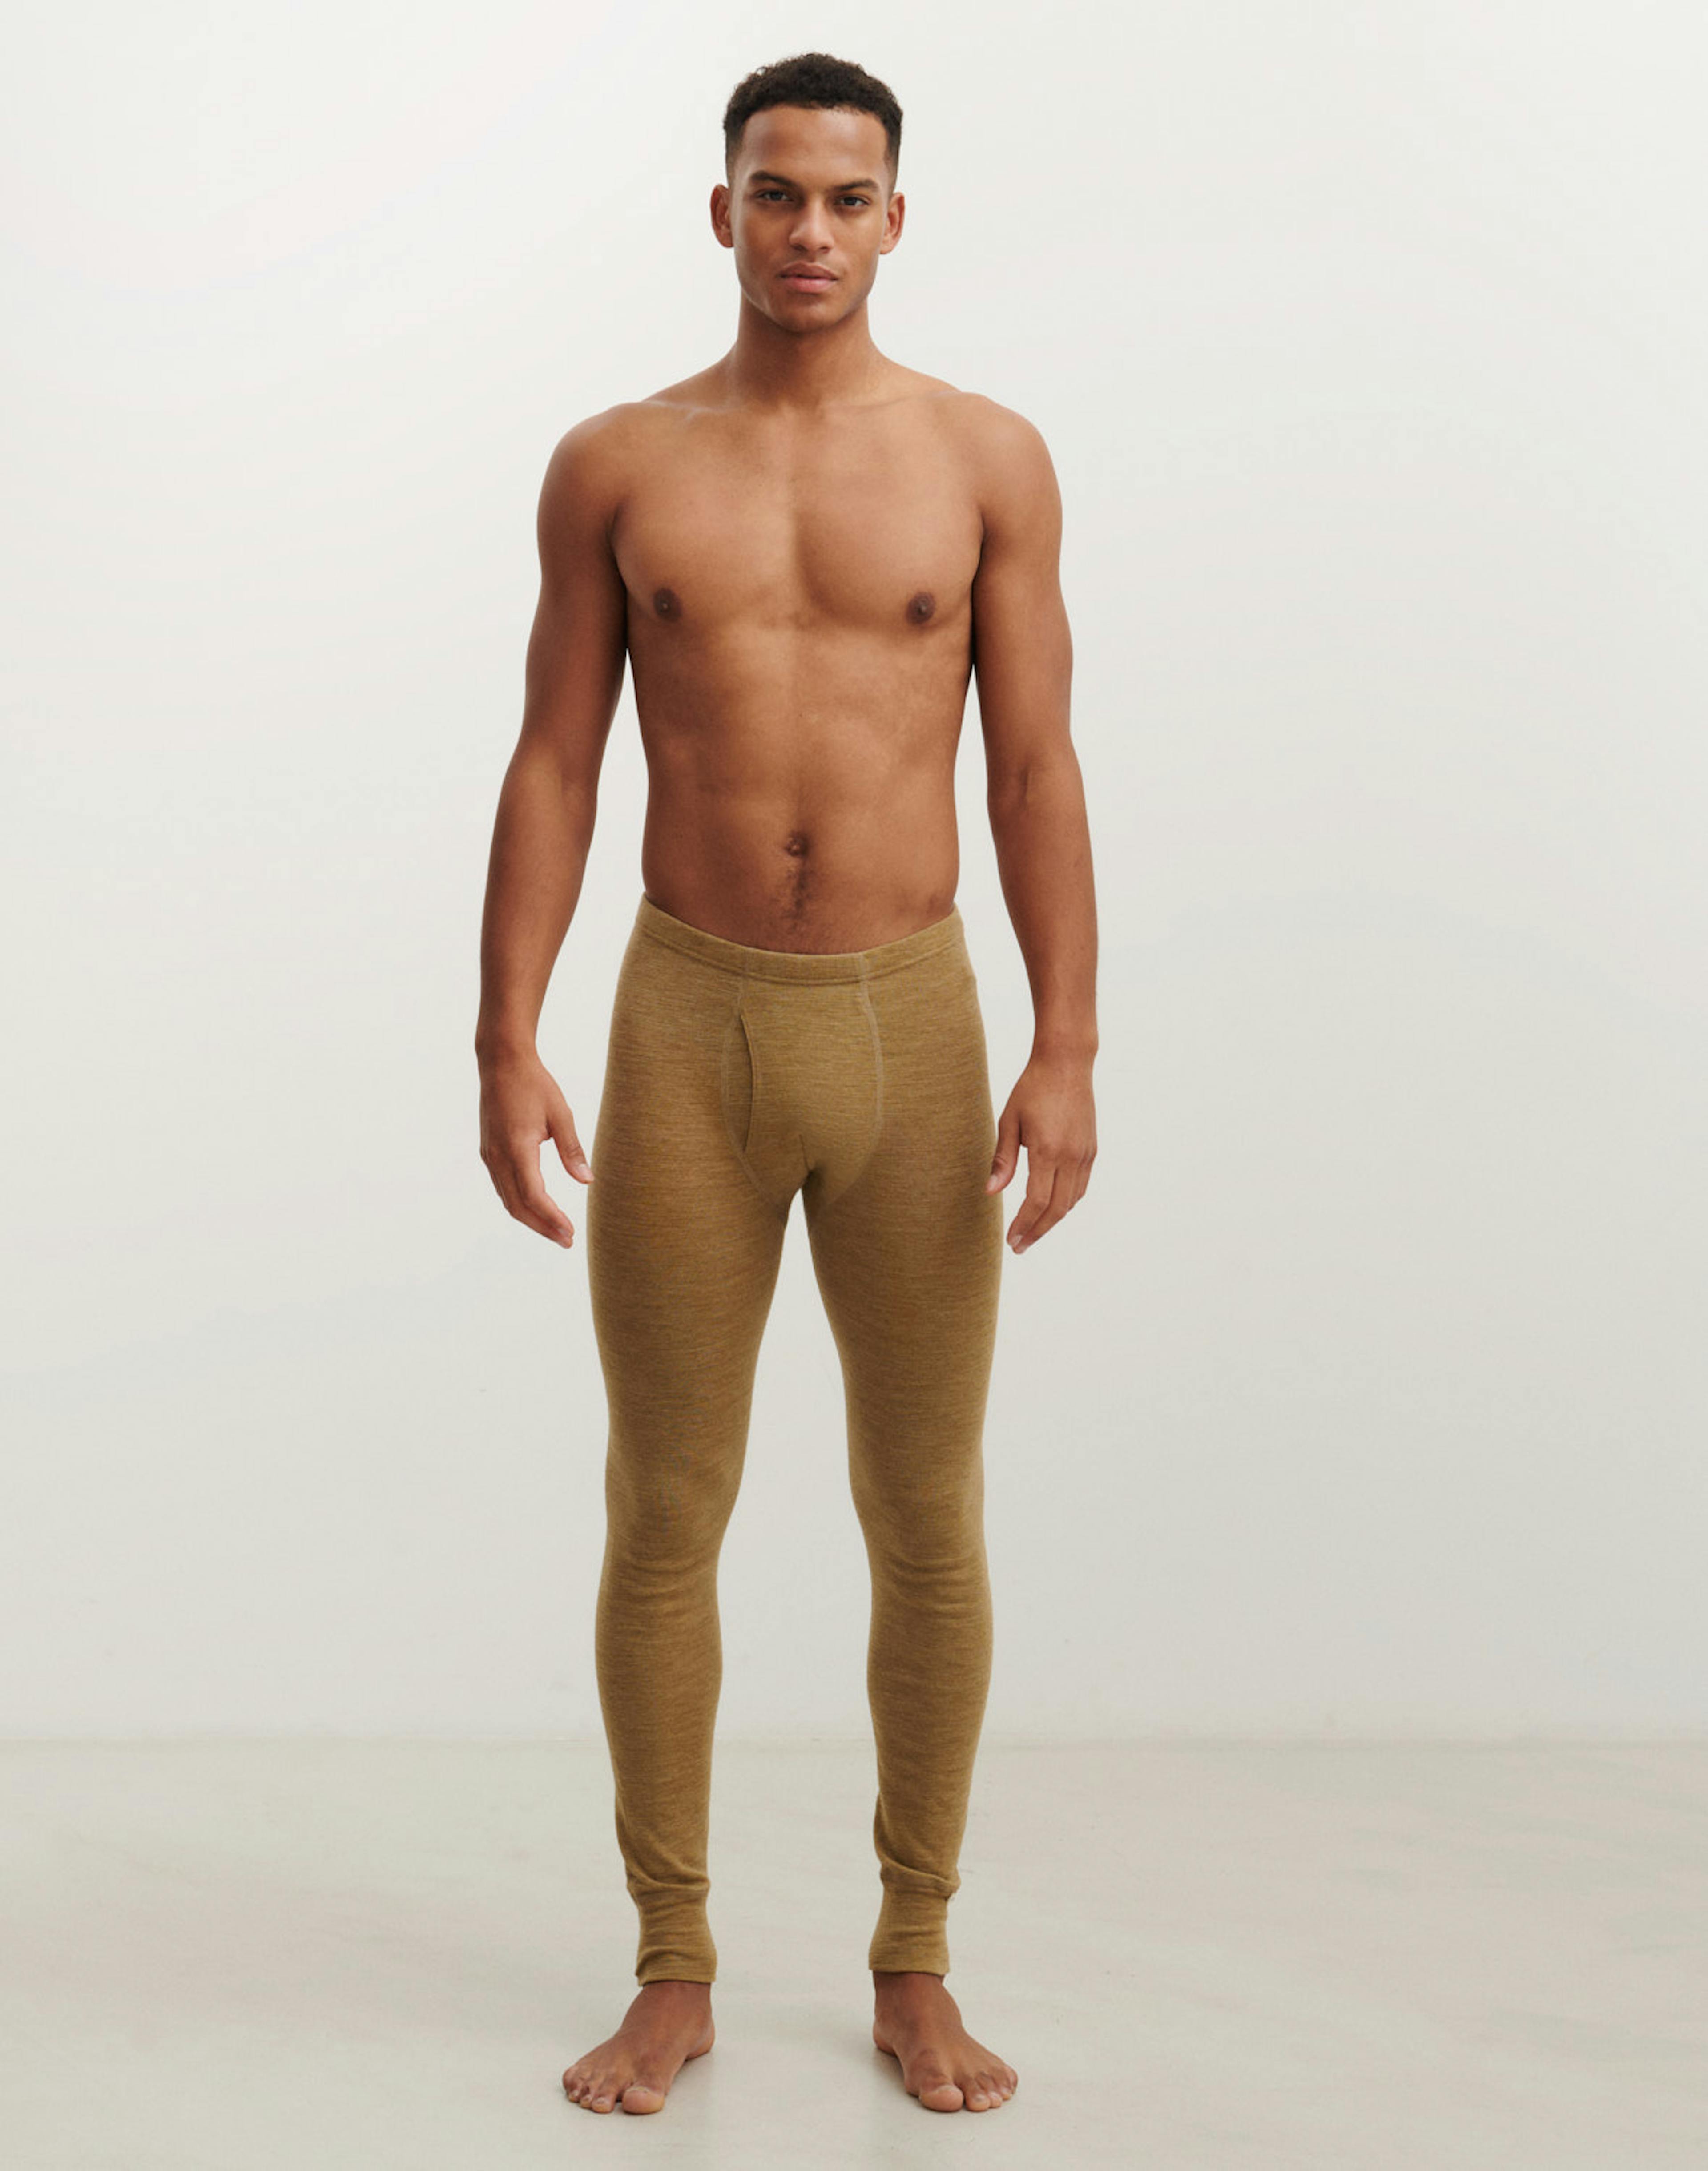 100 Merino Wool Leggings for Men - Thermal Underwear Pants - Fitness Outdoor